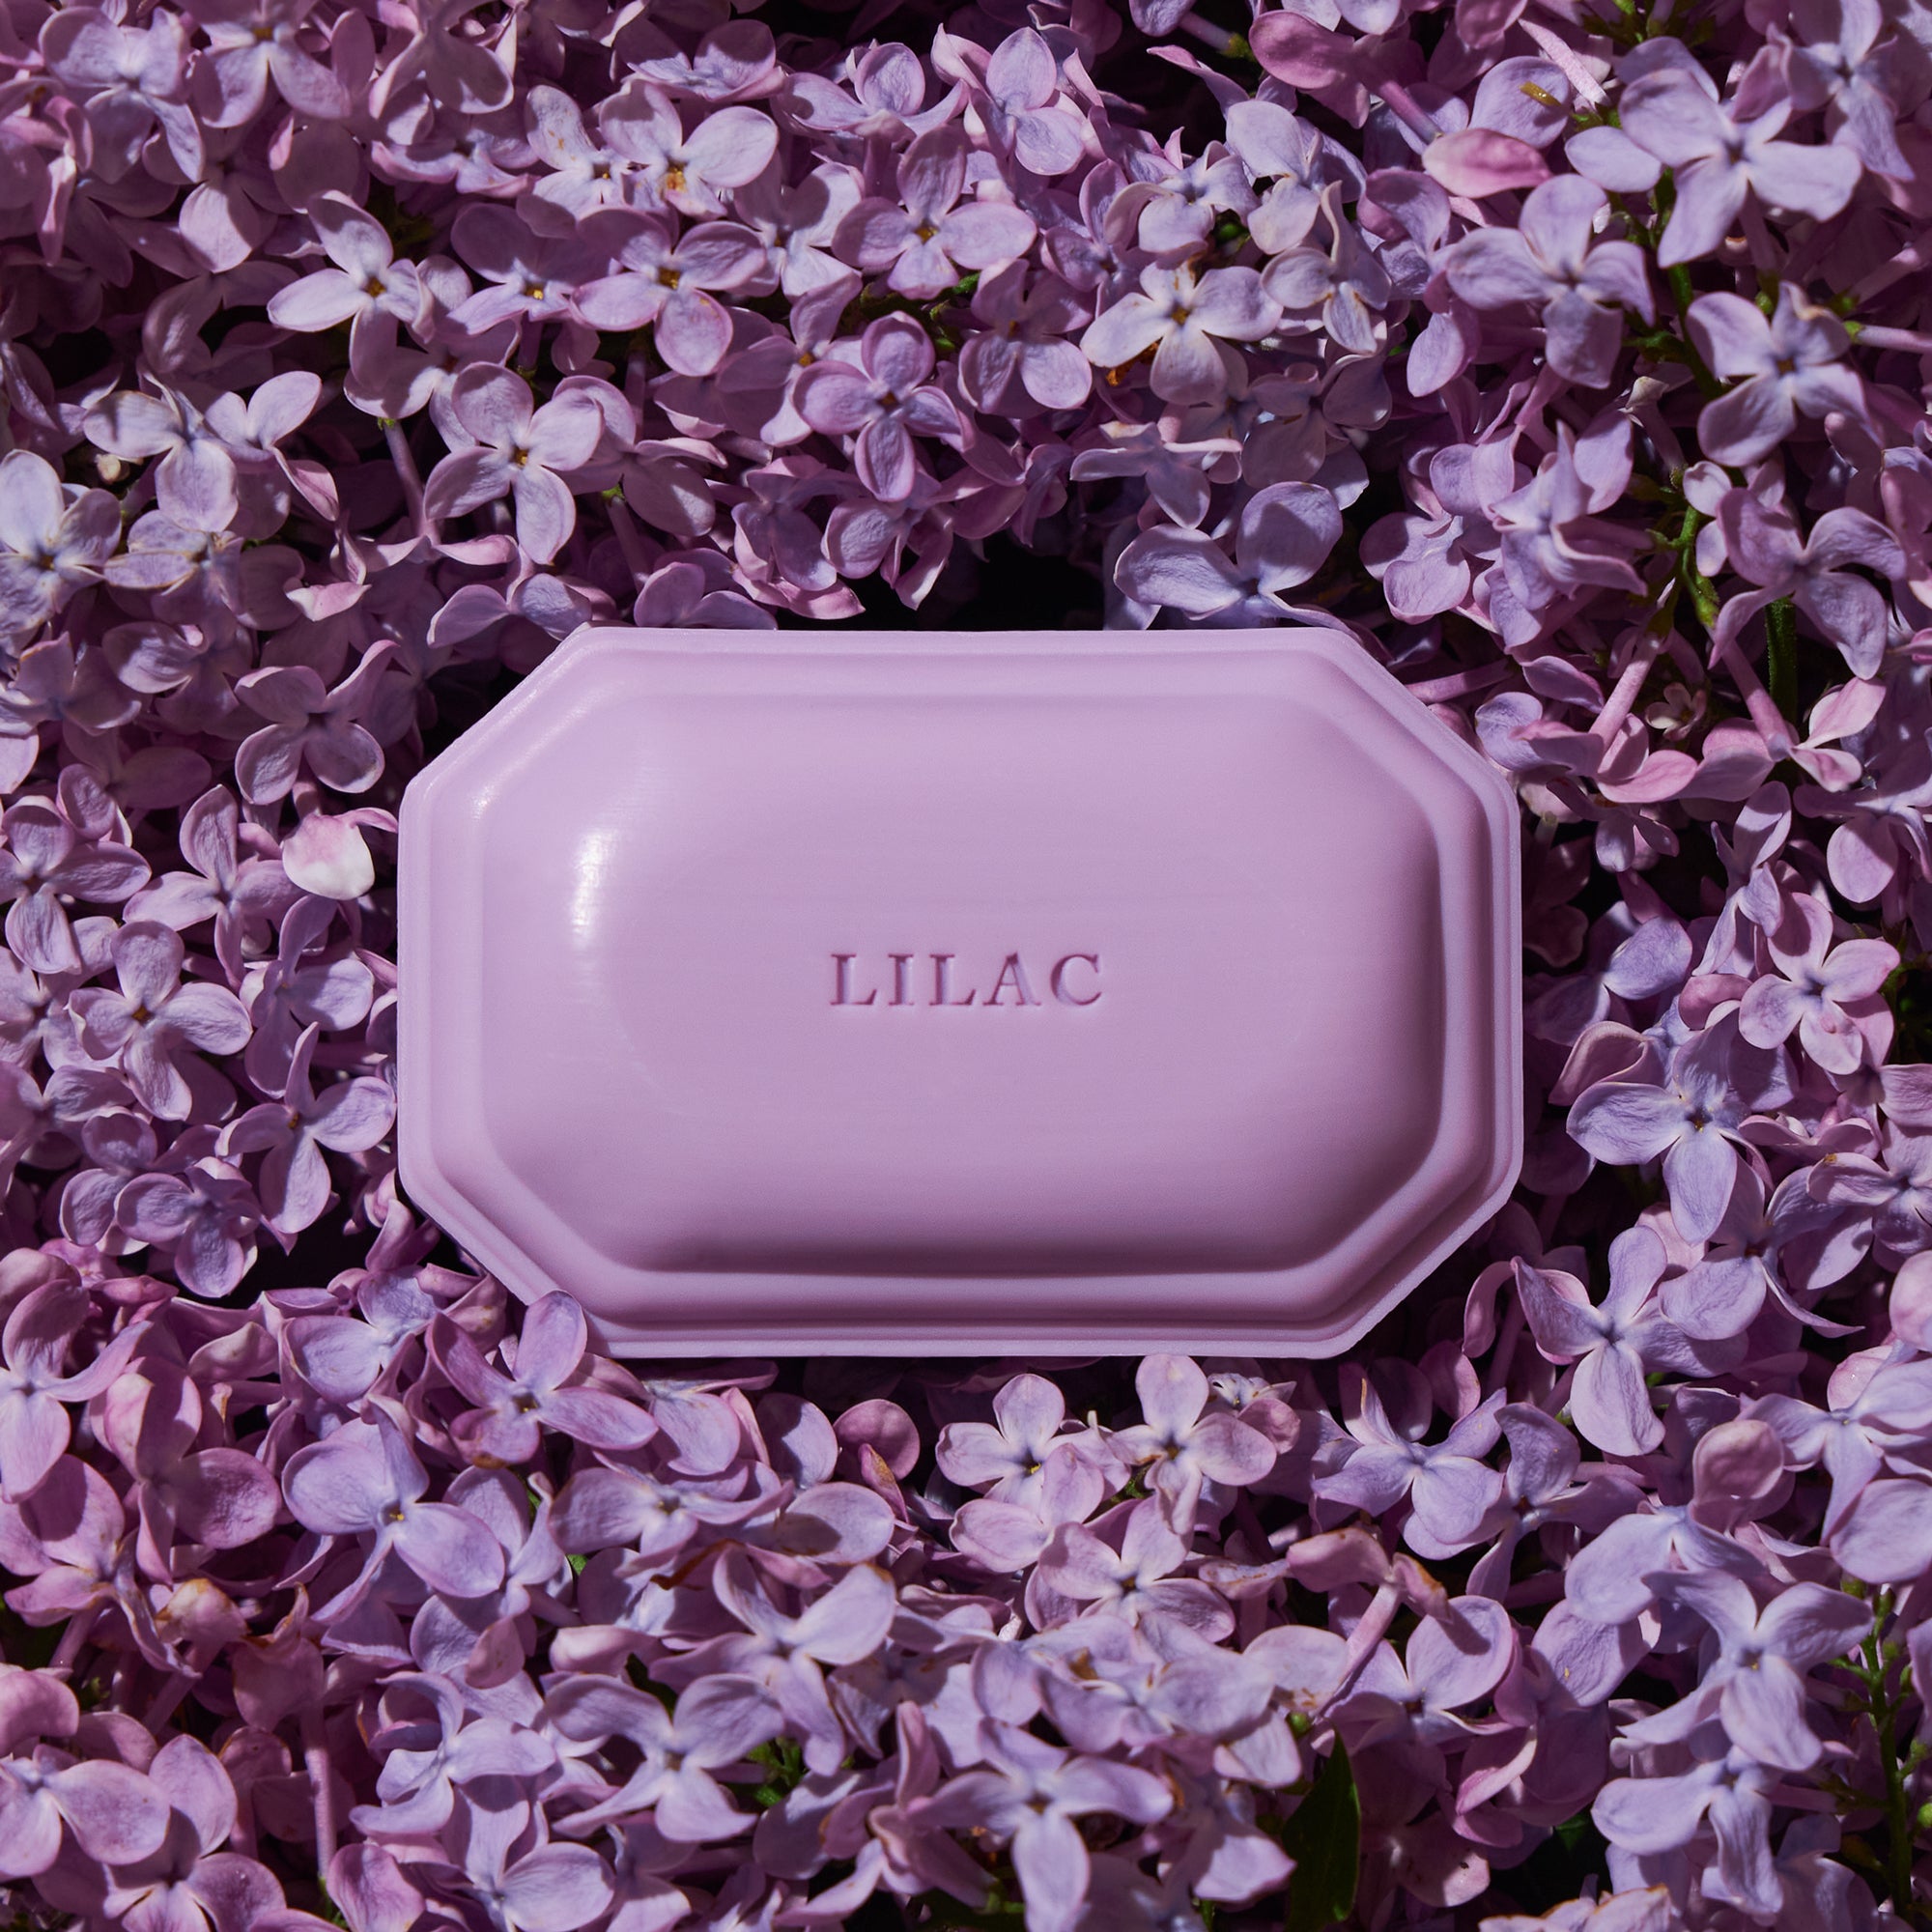 Caswell-Massey Lilac Luxury Bath Soap light purple decorative bath soap on top of purple lilac petals